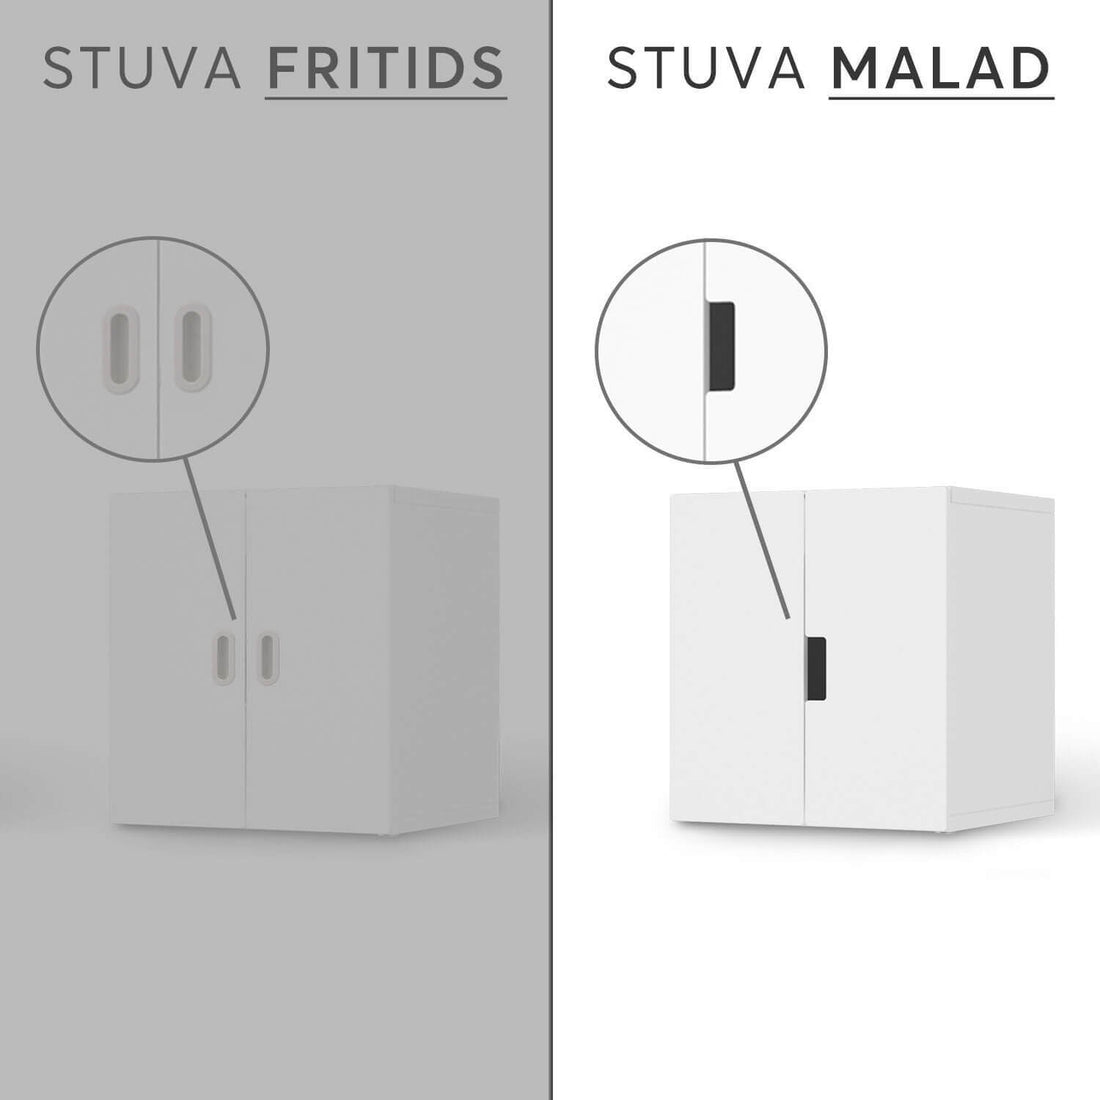 Vergleich IKEA Stuva Malad / Fritids - Goal